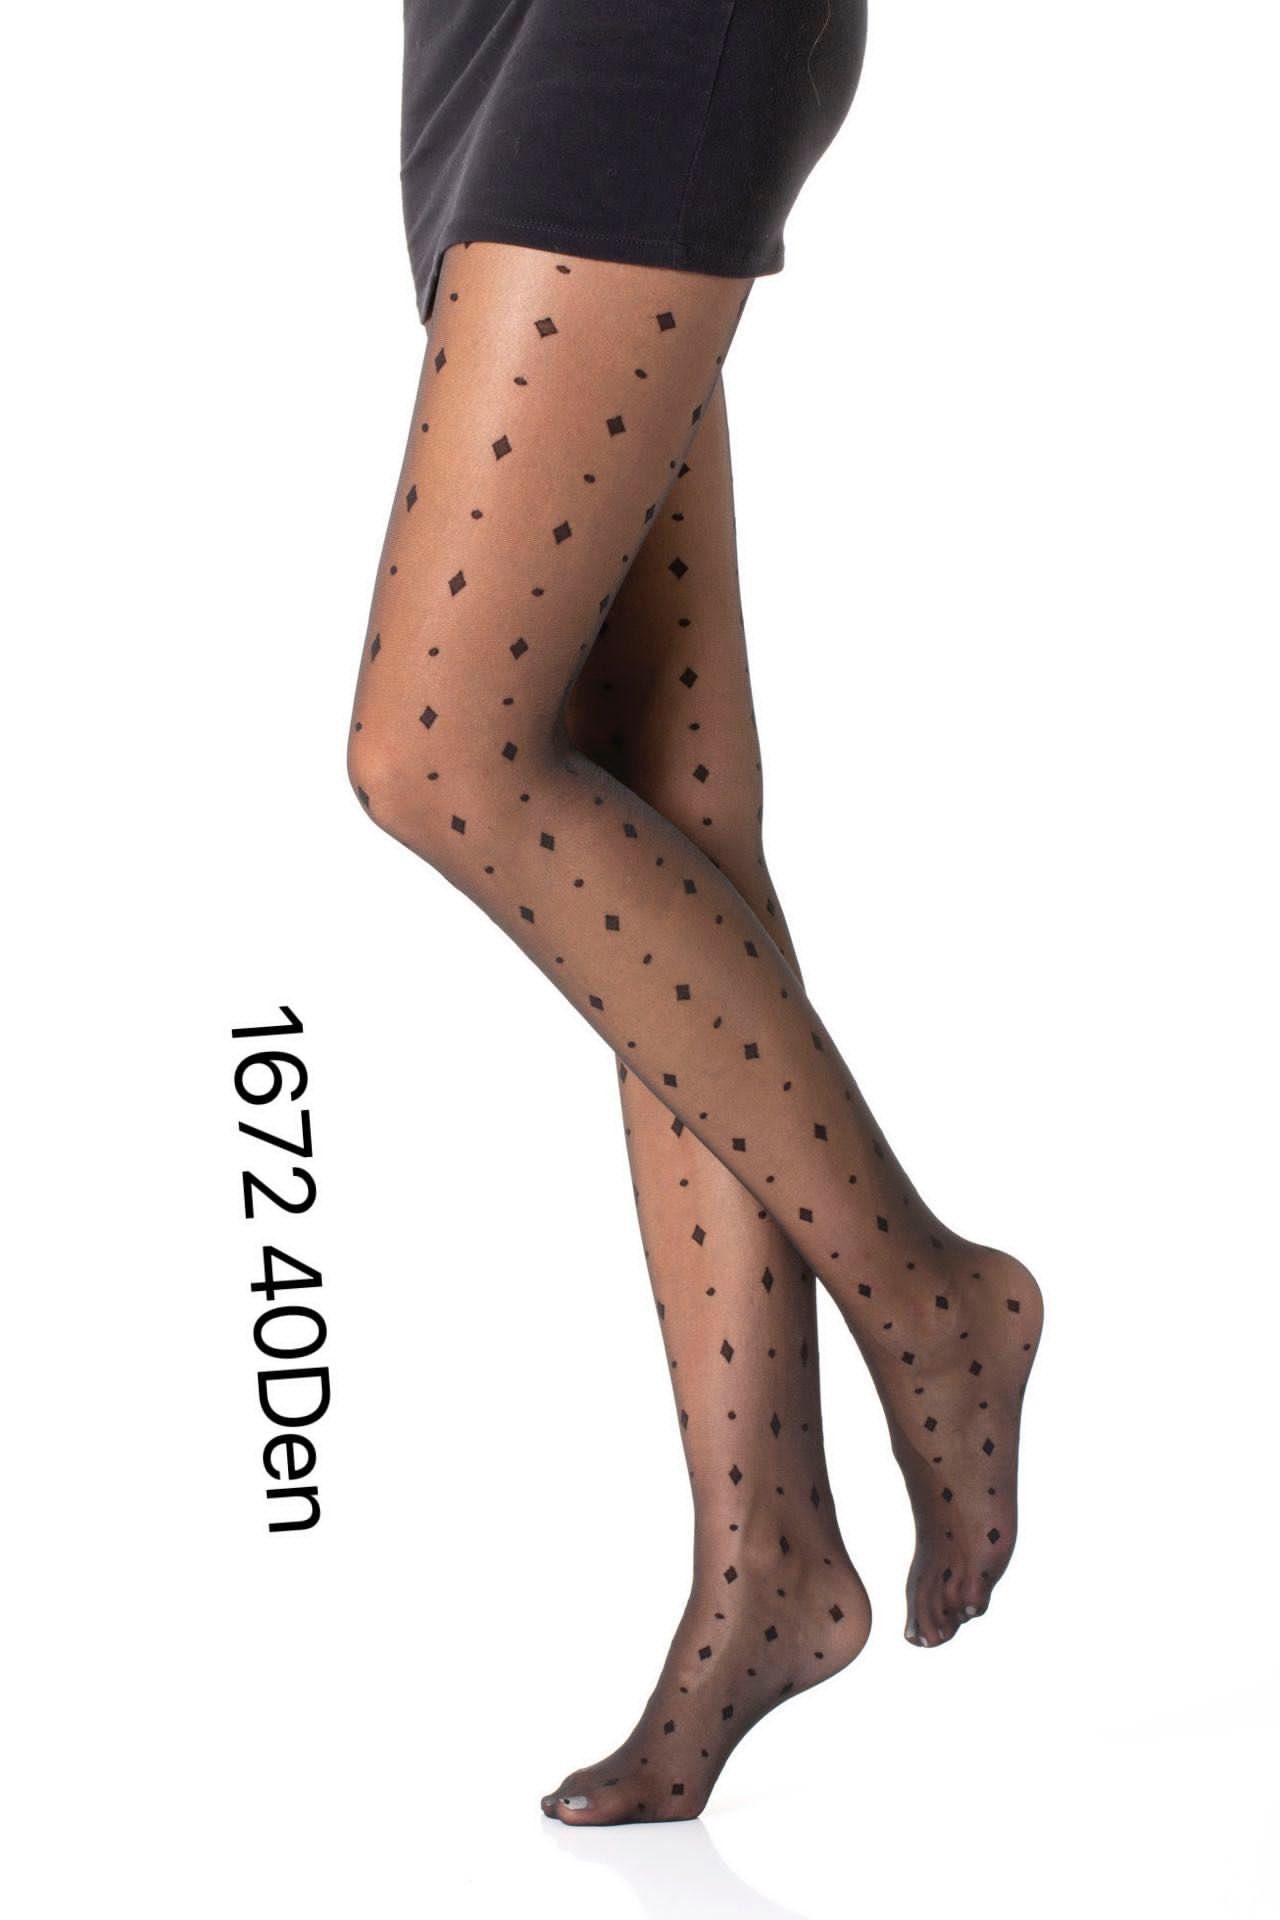 Hose DEN Nero cofi1453 Feinstrumpfhose 40 mit schwarz Damen Socken Strumpfhose Frauen Muster